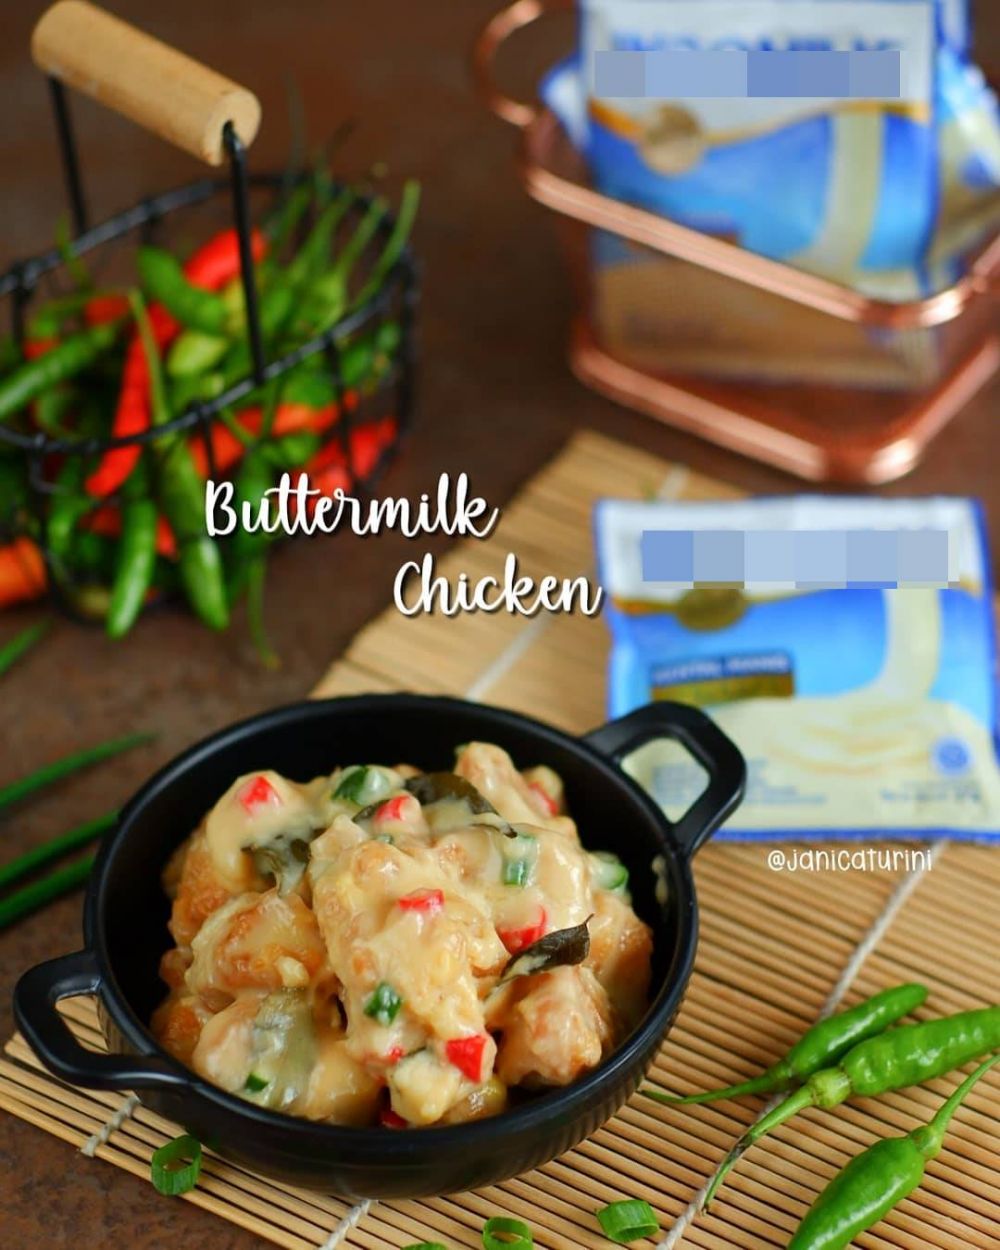 Buttermilk chicken recipe, the current menu has a special taste